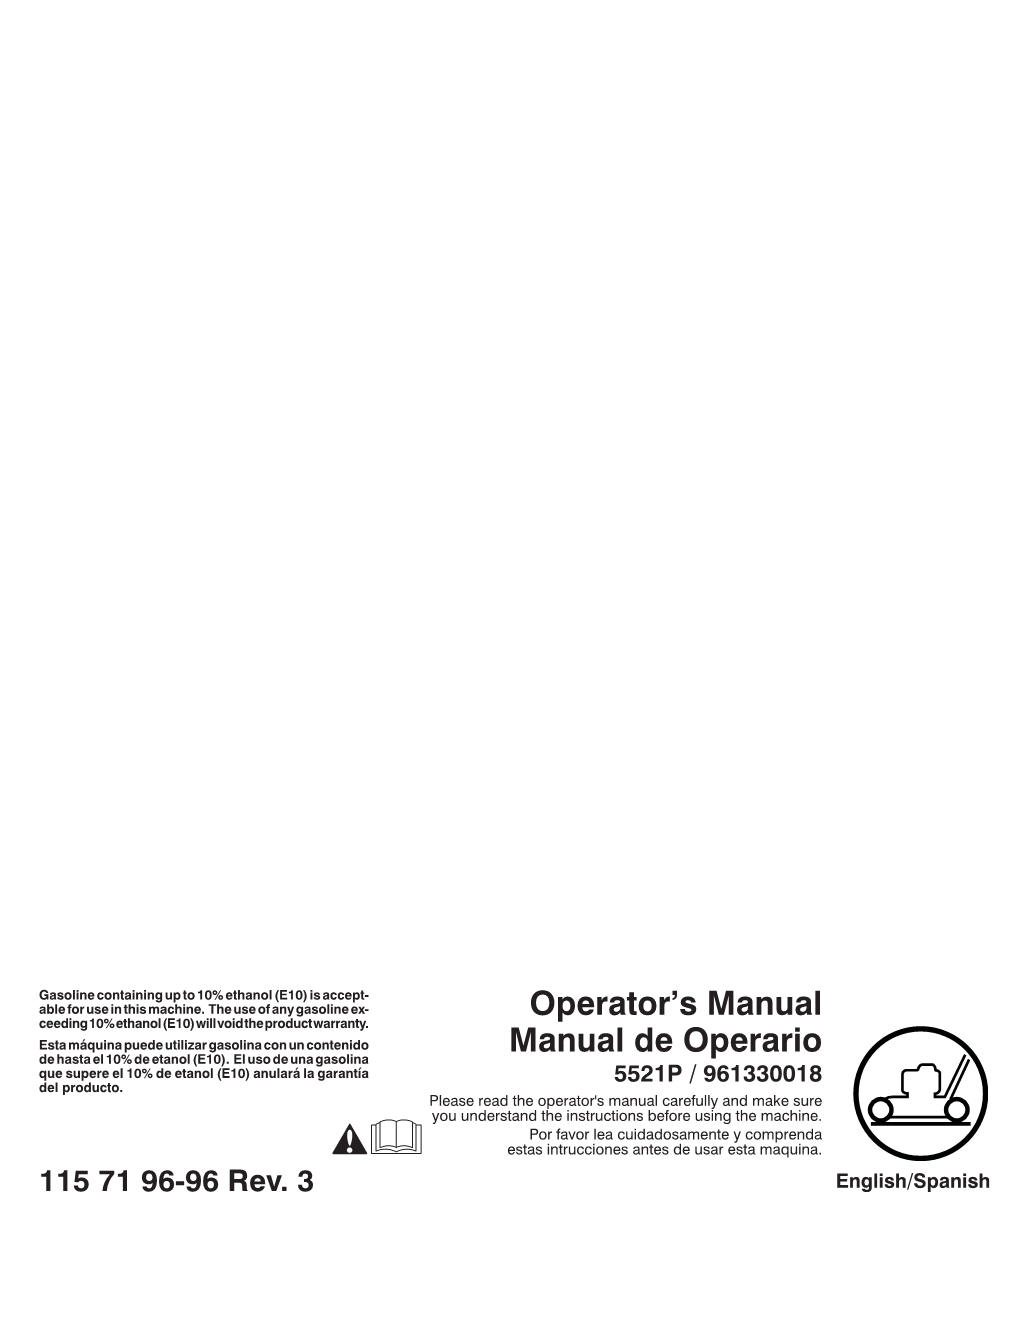 Operator's Manual Manual De Operario